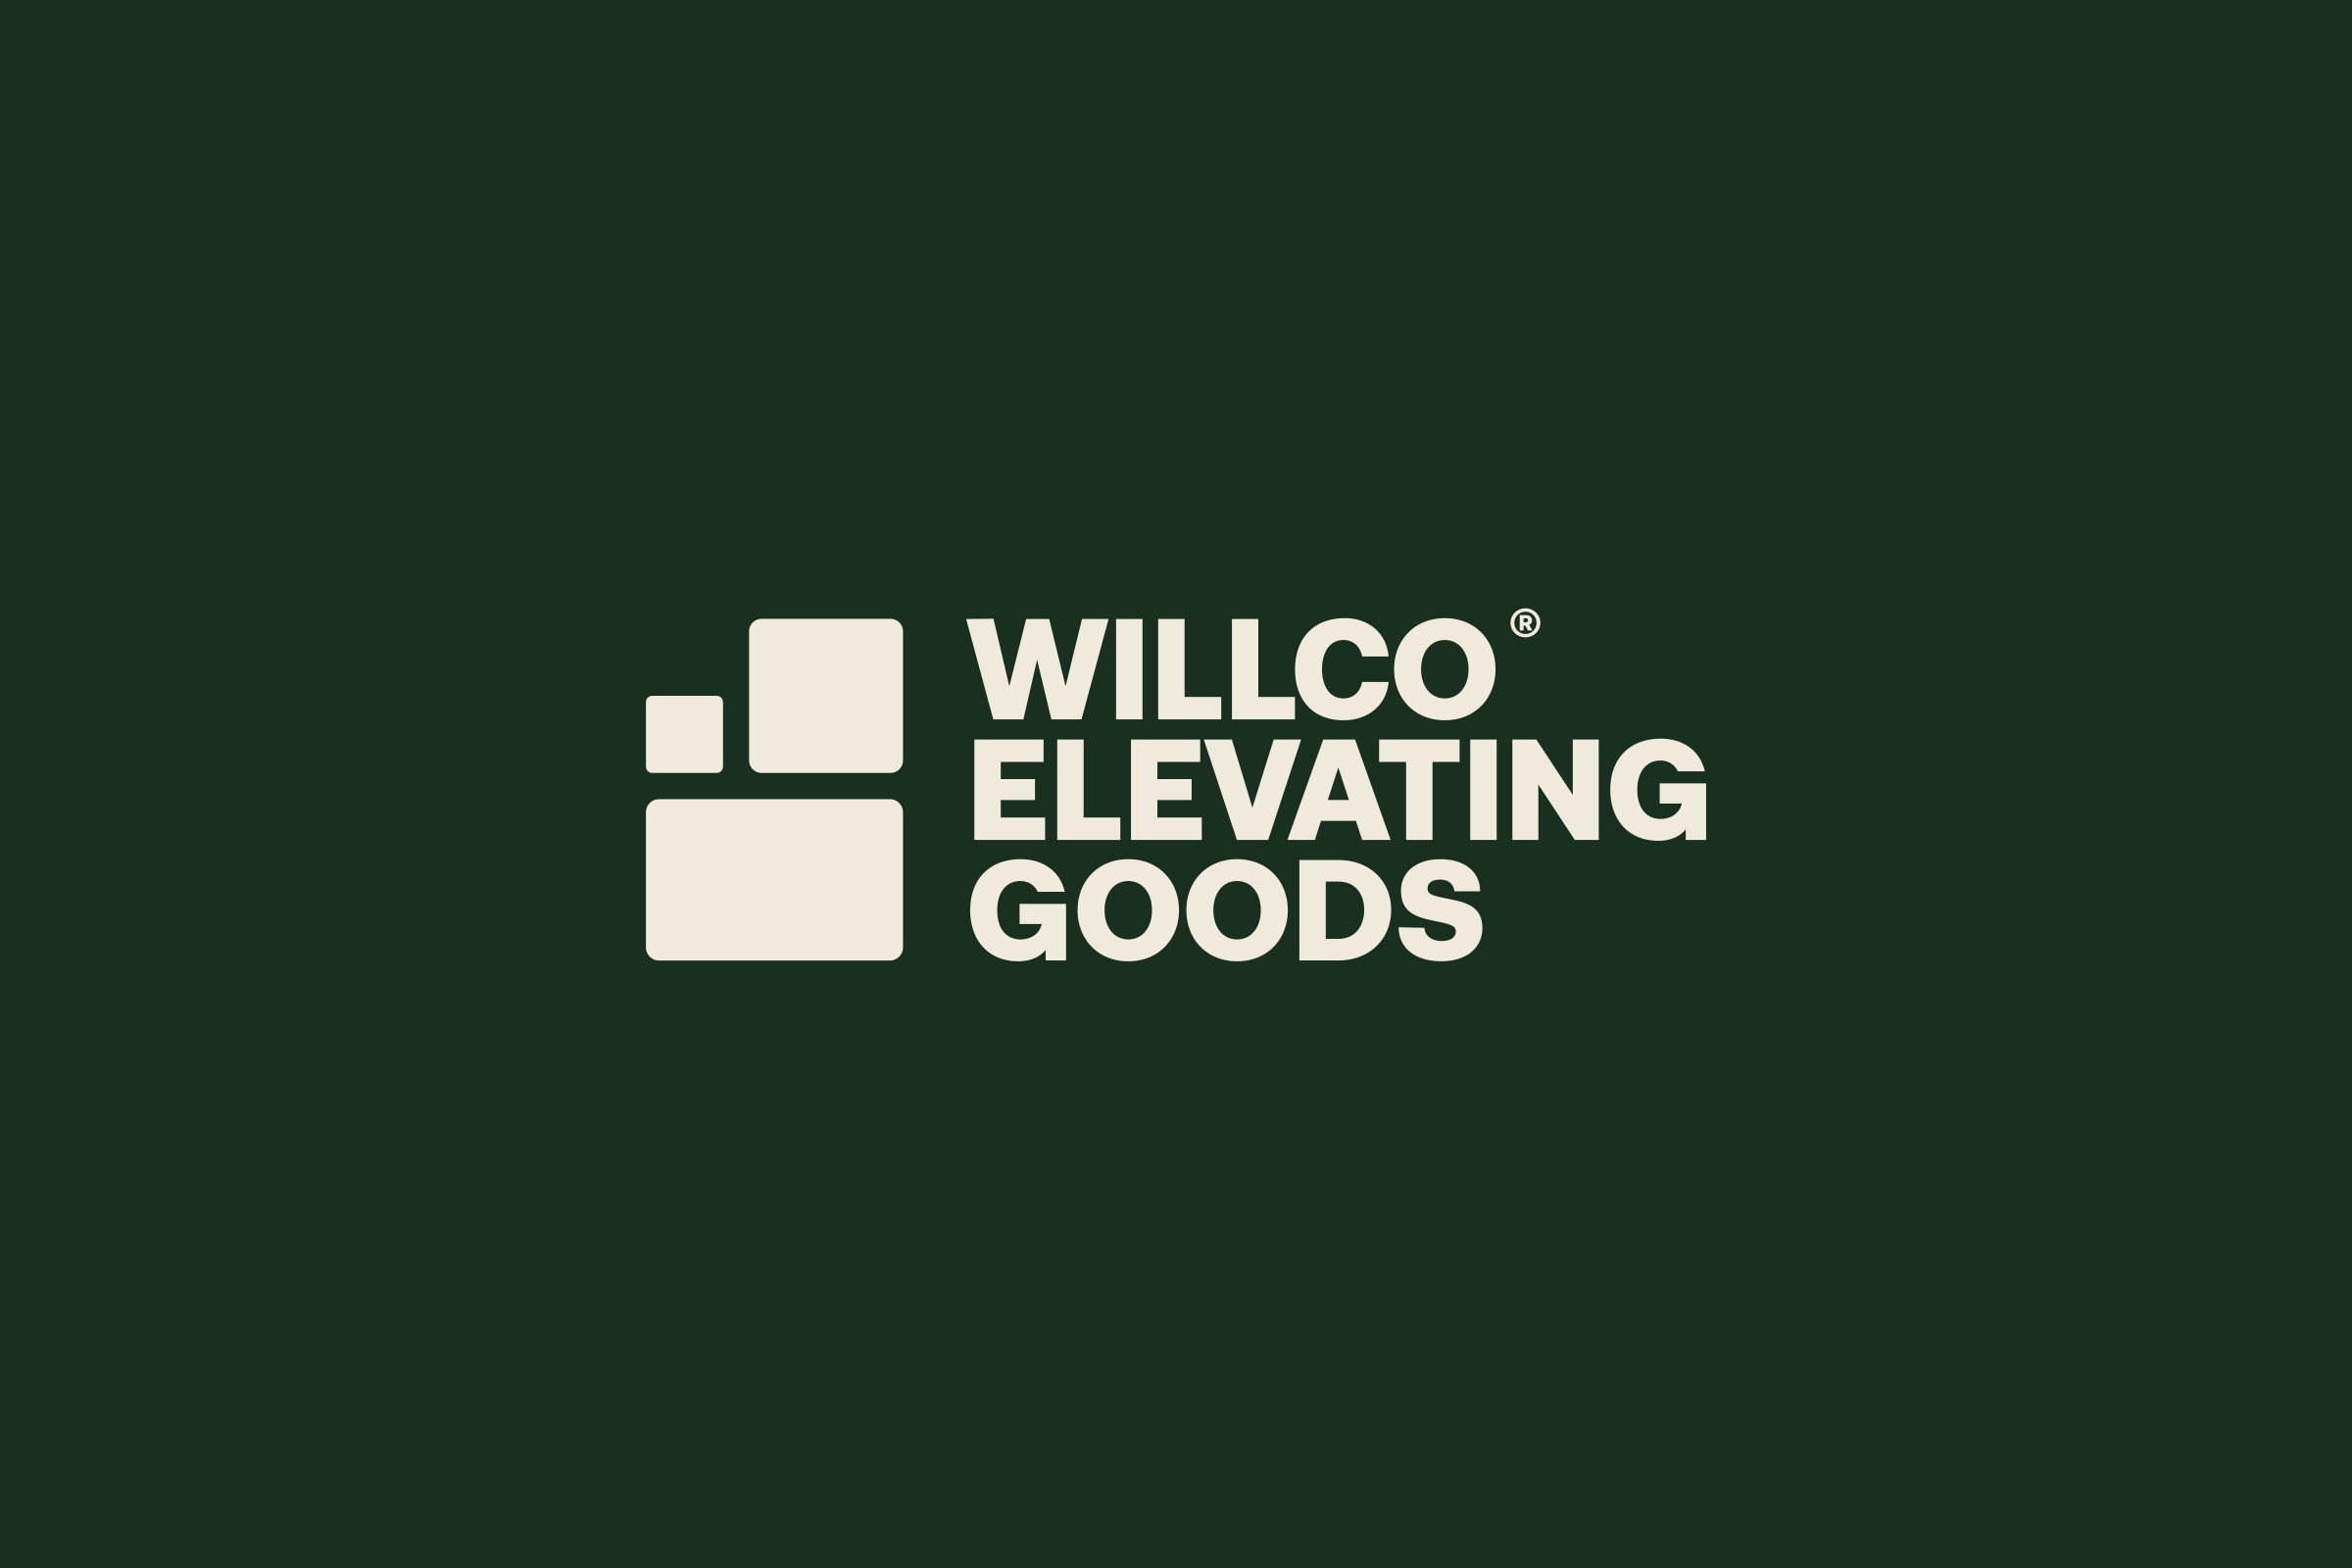 Willco Elevating Goods by Cursor Design Studio